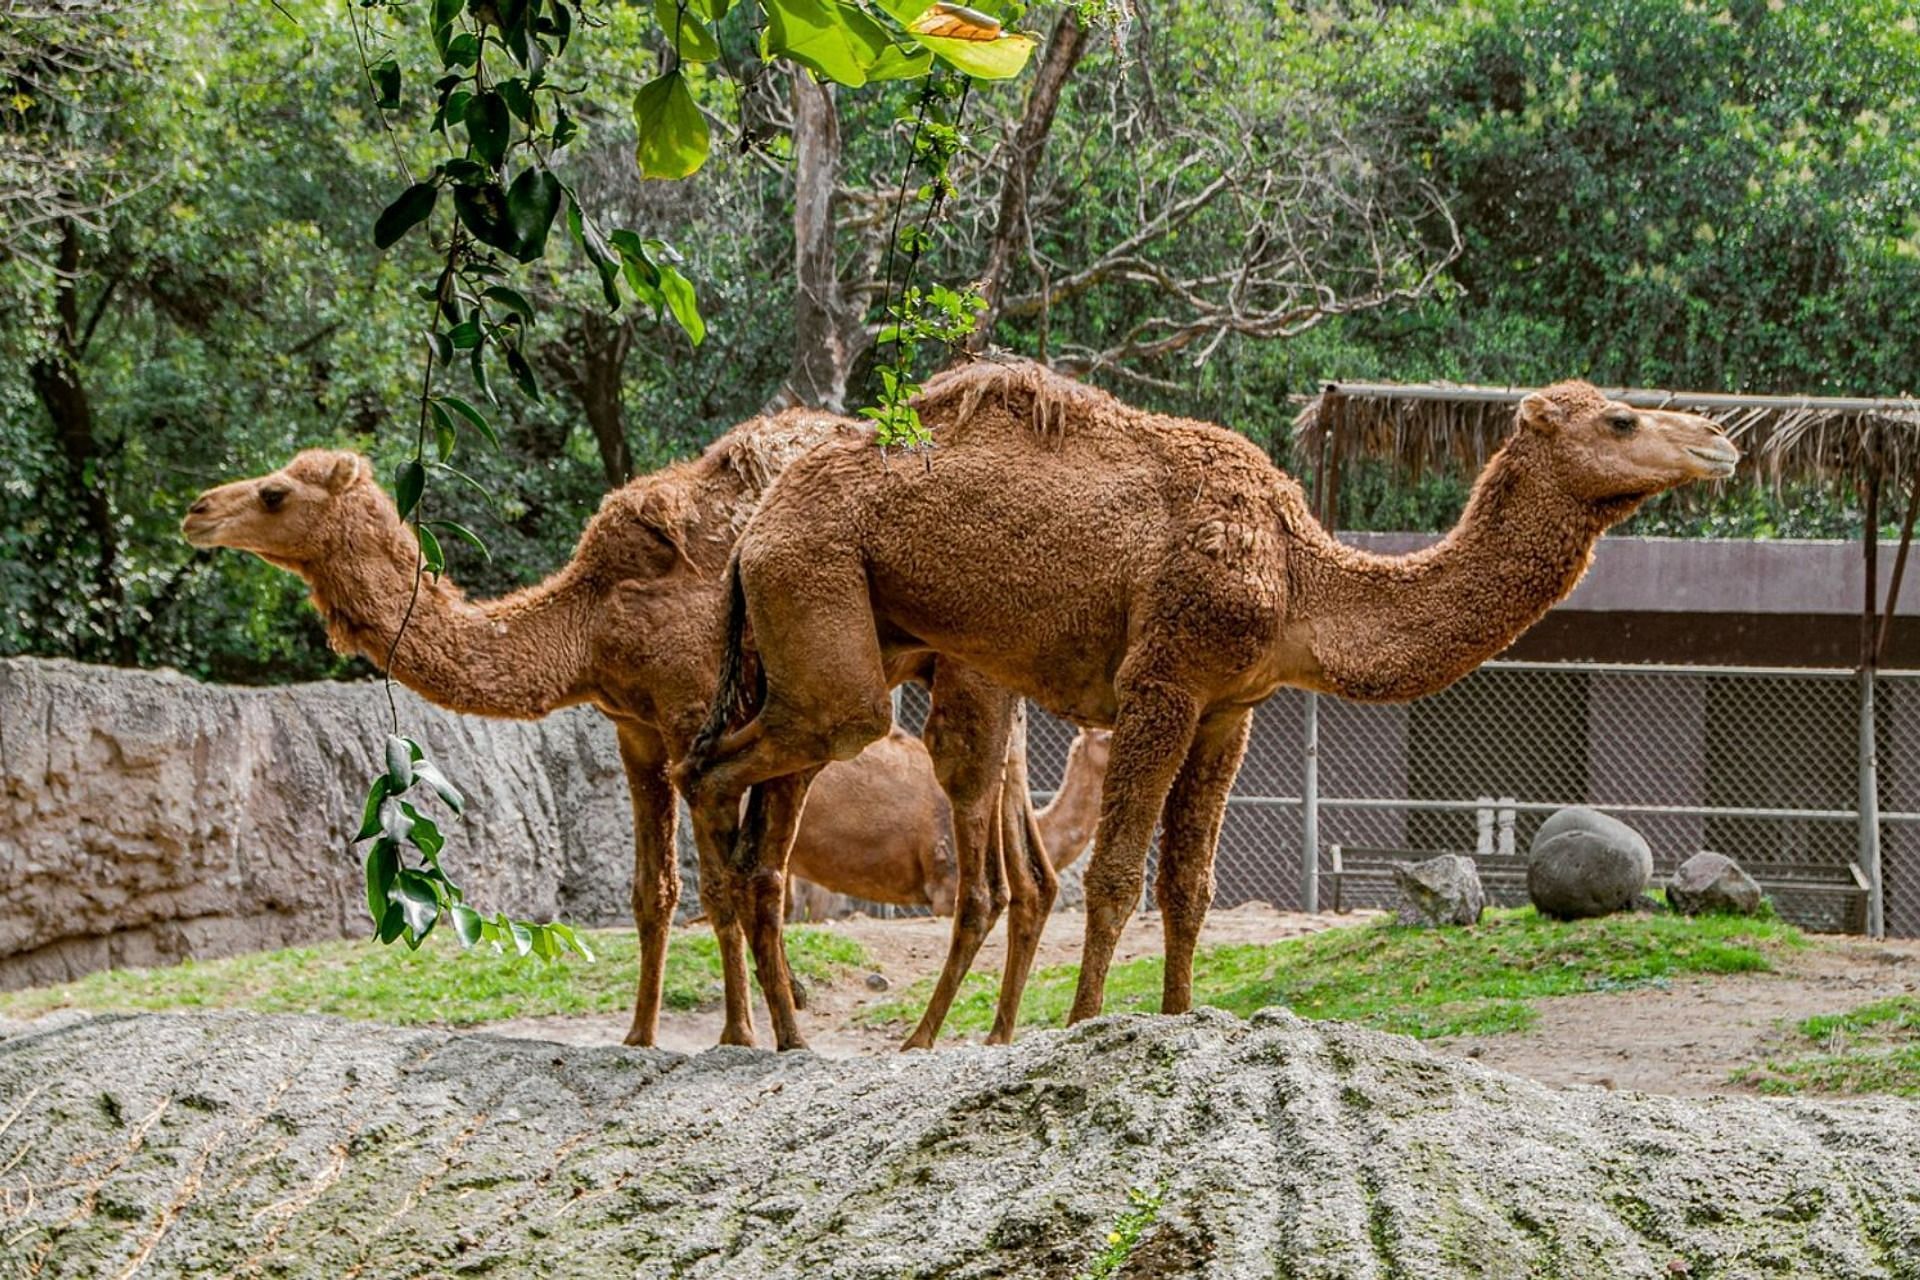 Camel kills two people near petting zoo (Image via Pixabay)